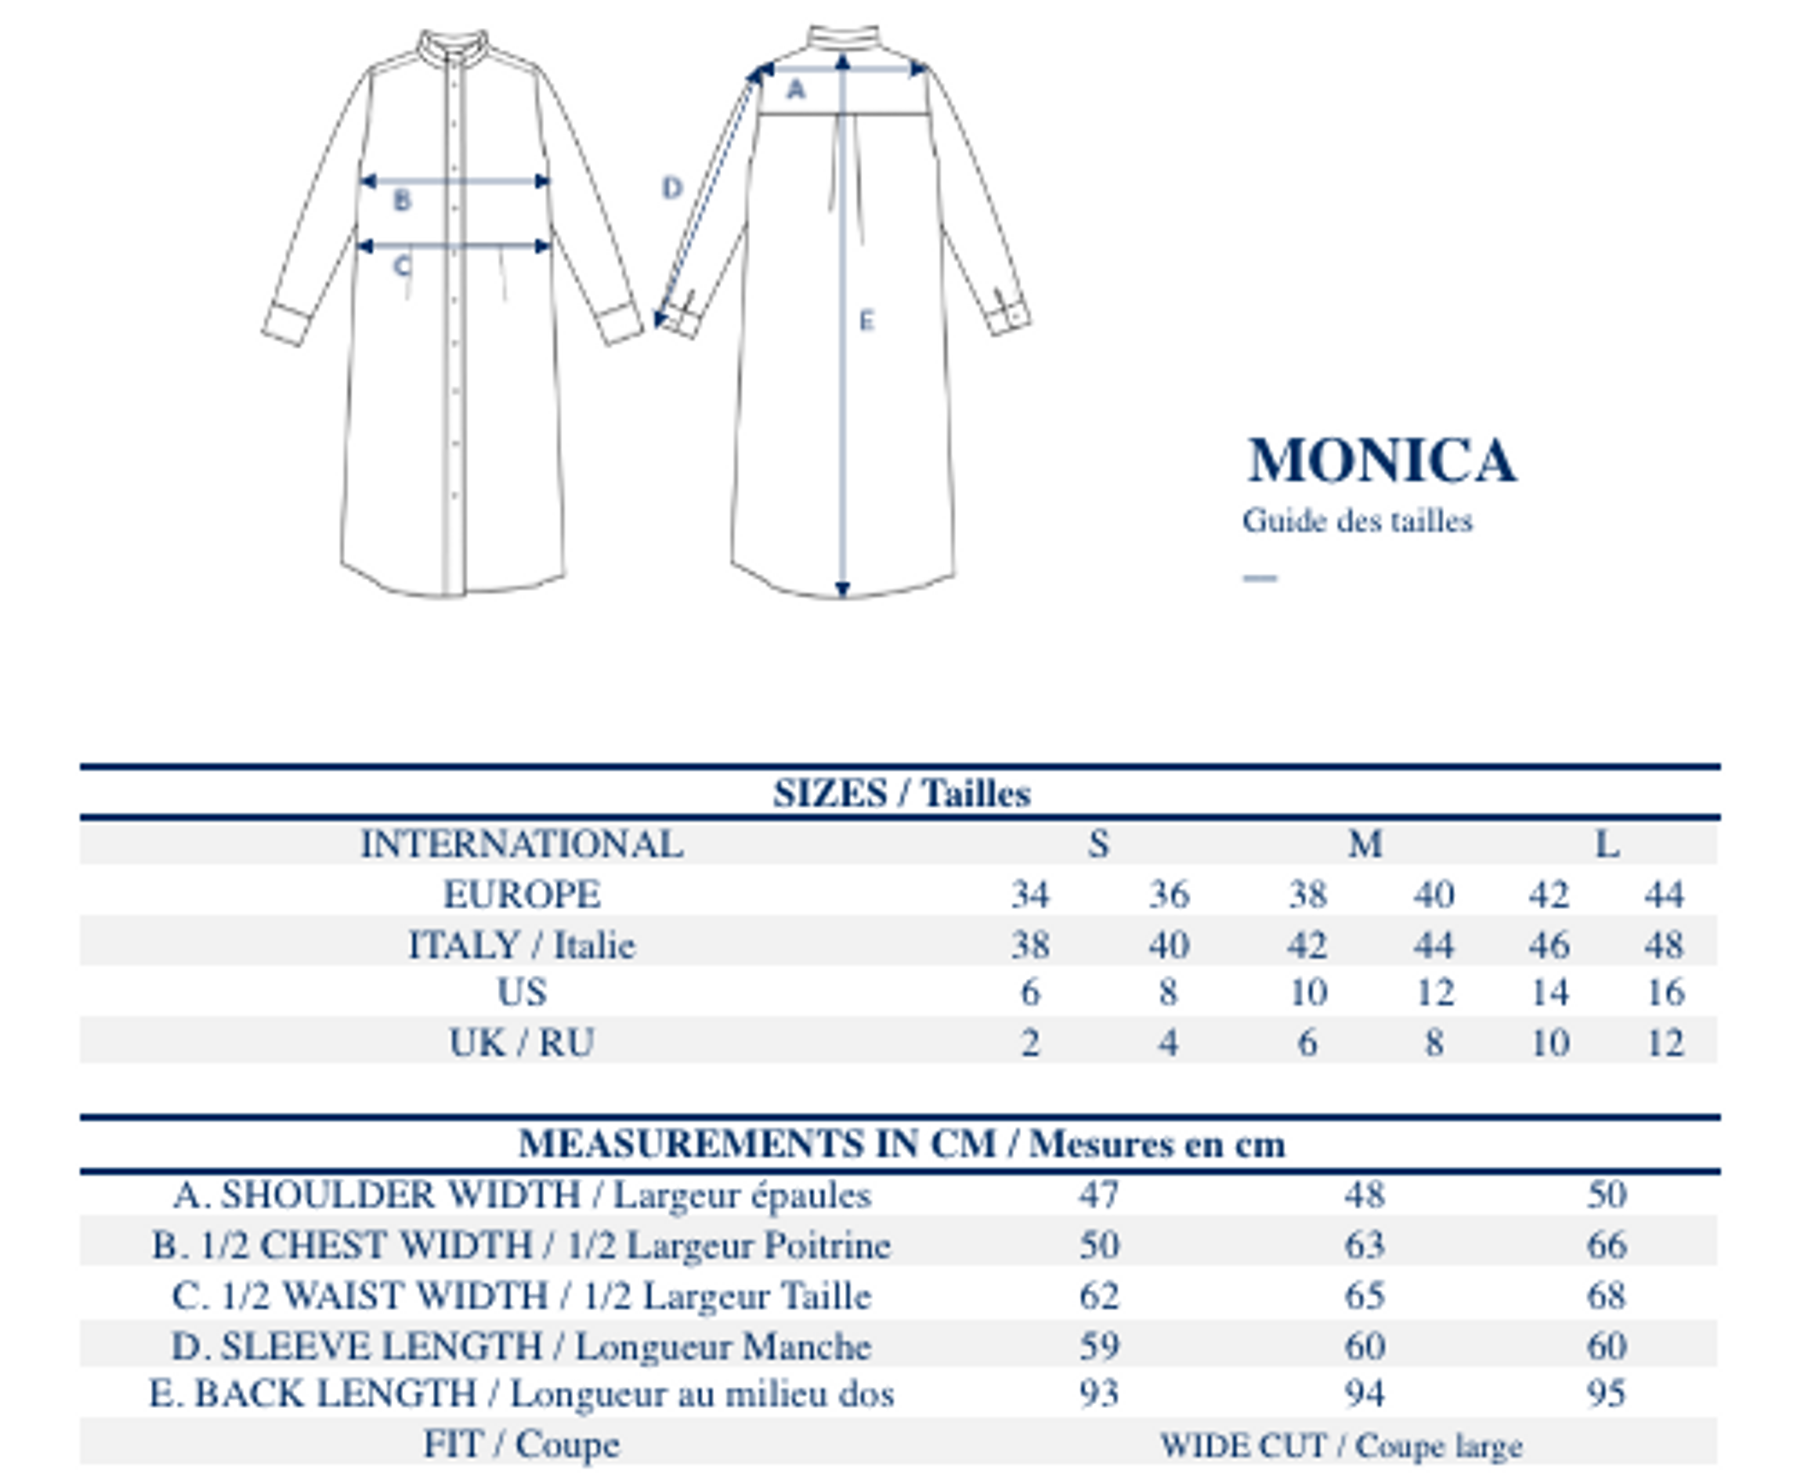 dress-monica-print